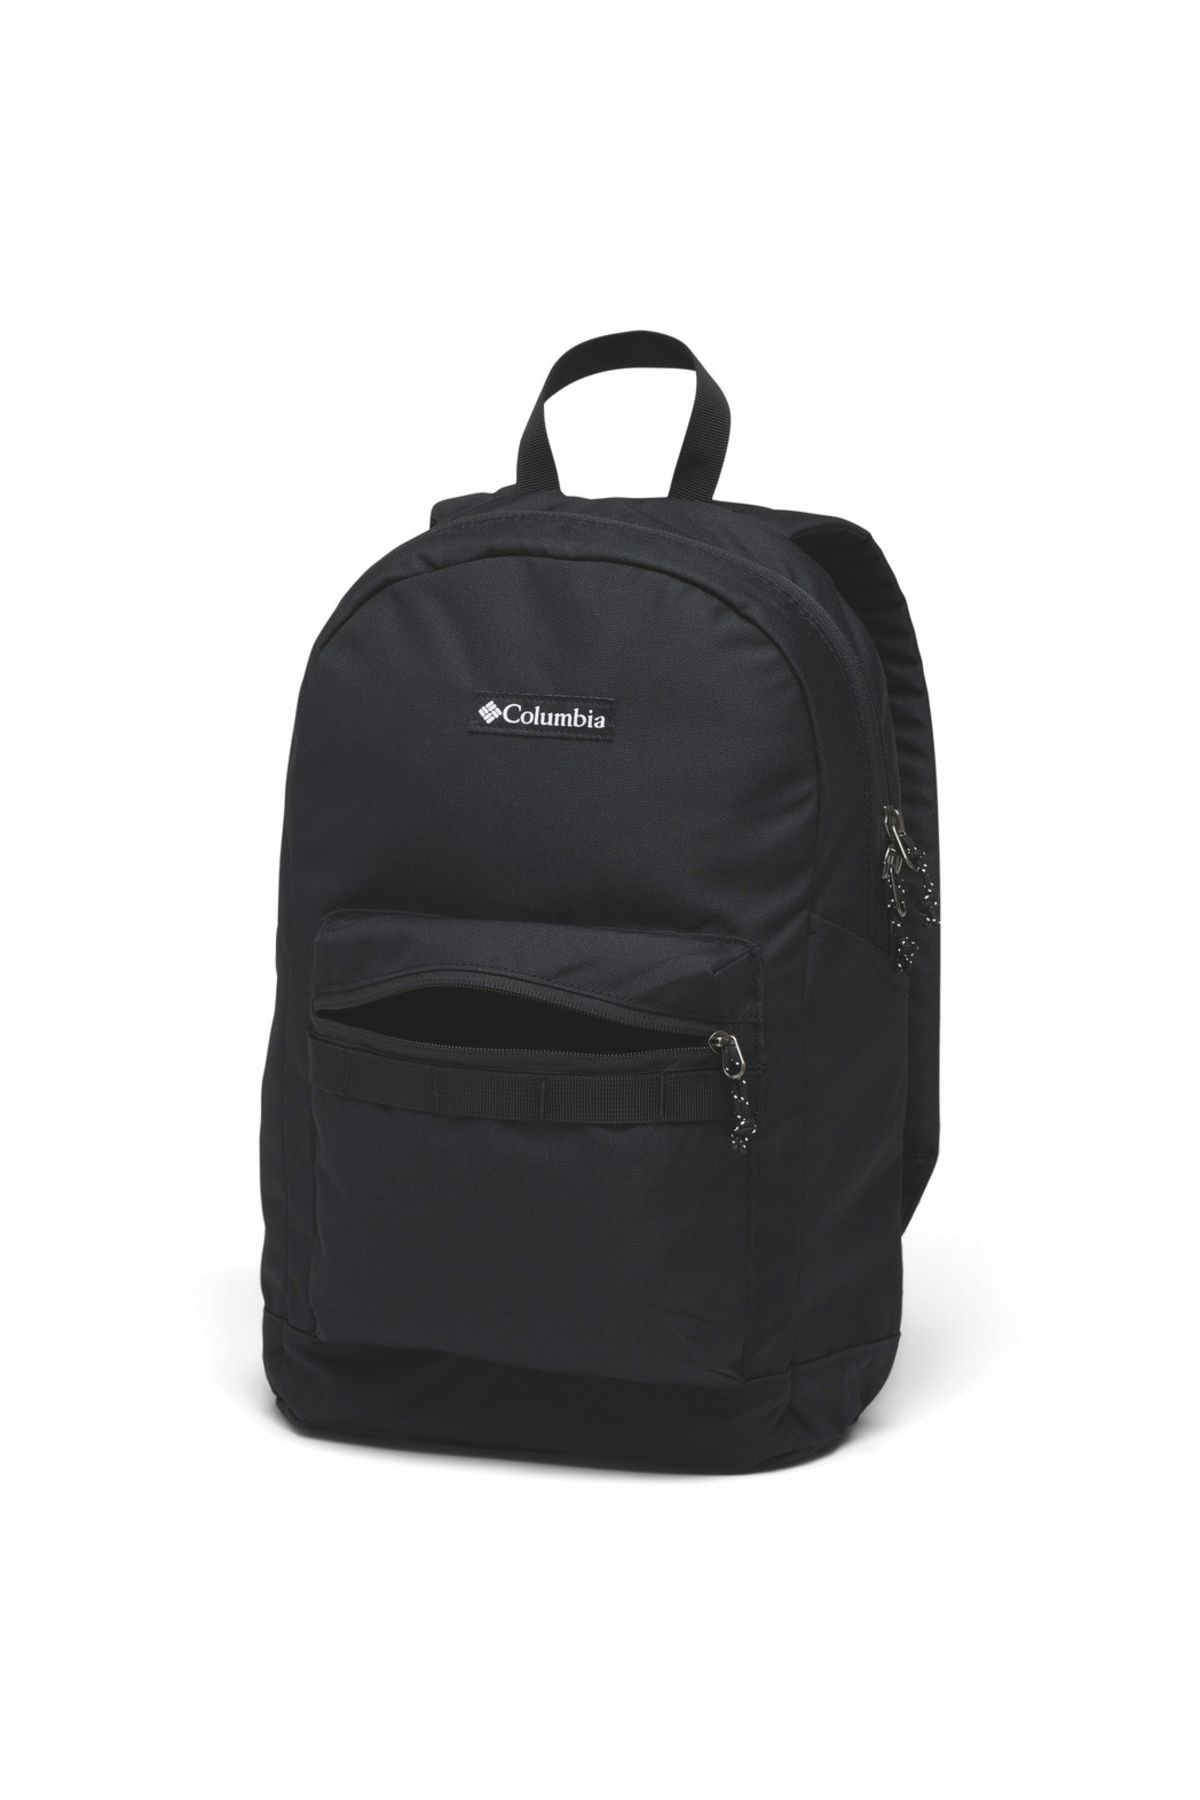 Mochila Columbia Zigzag 18l Backpack Black Unisex